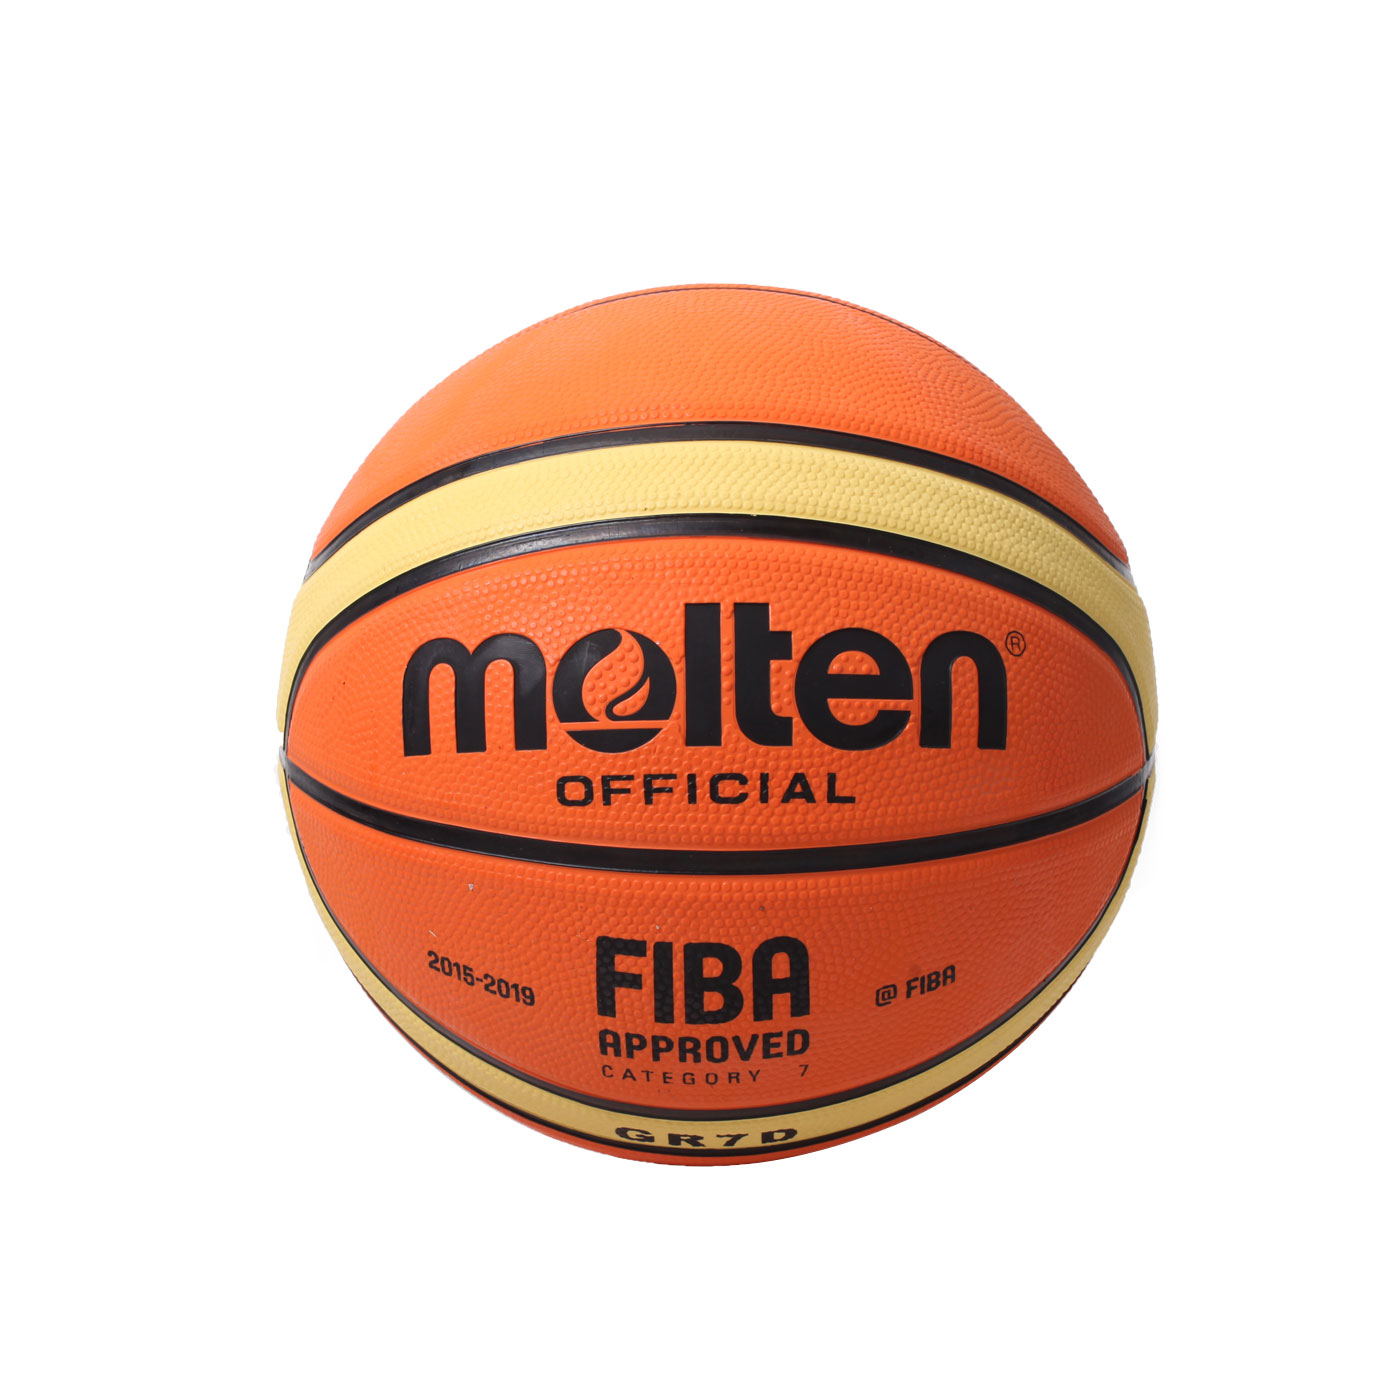 Molten 12片橡膠深溝籃球 BGR7D - 黃橘